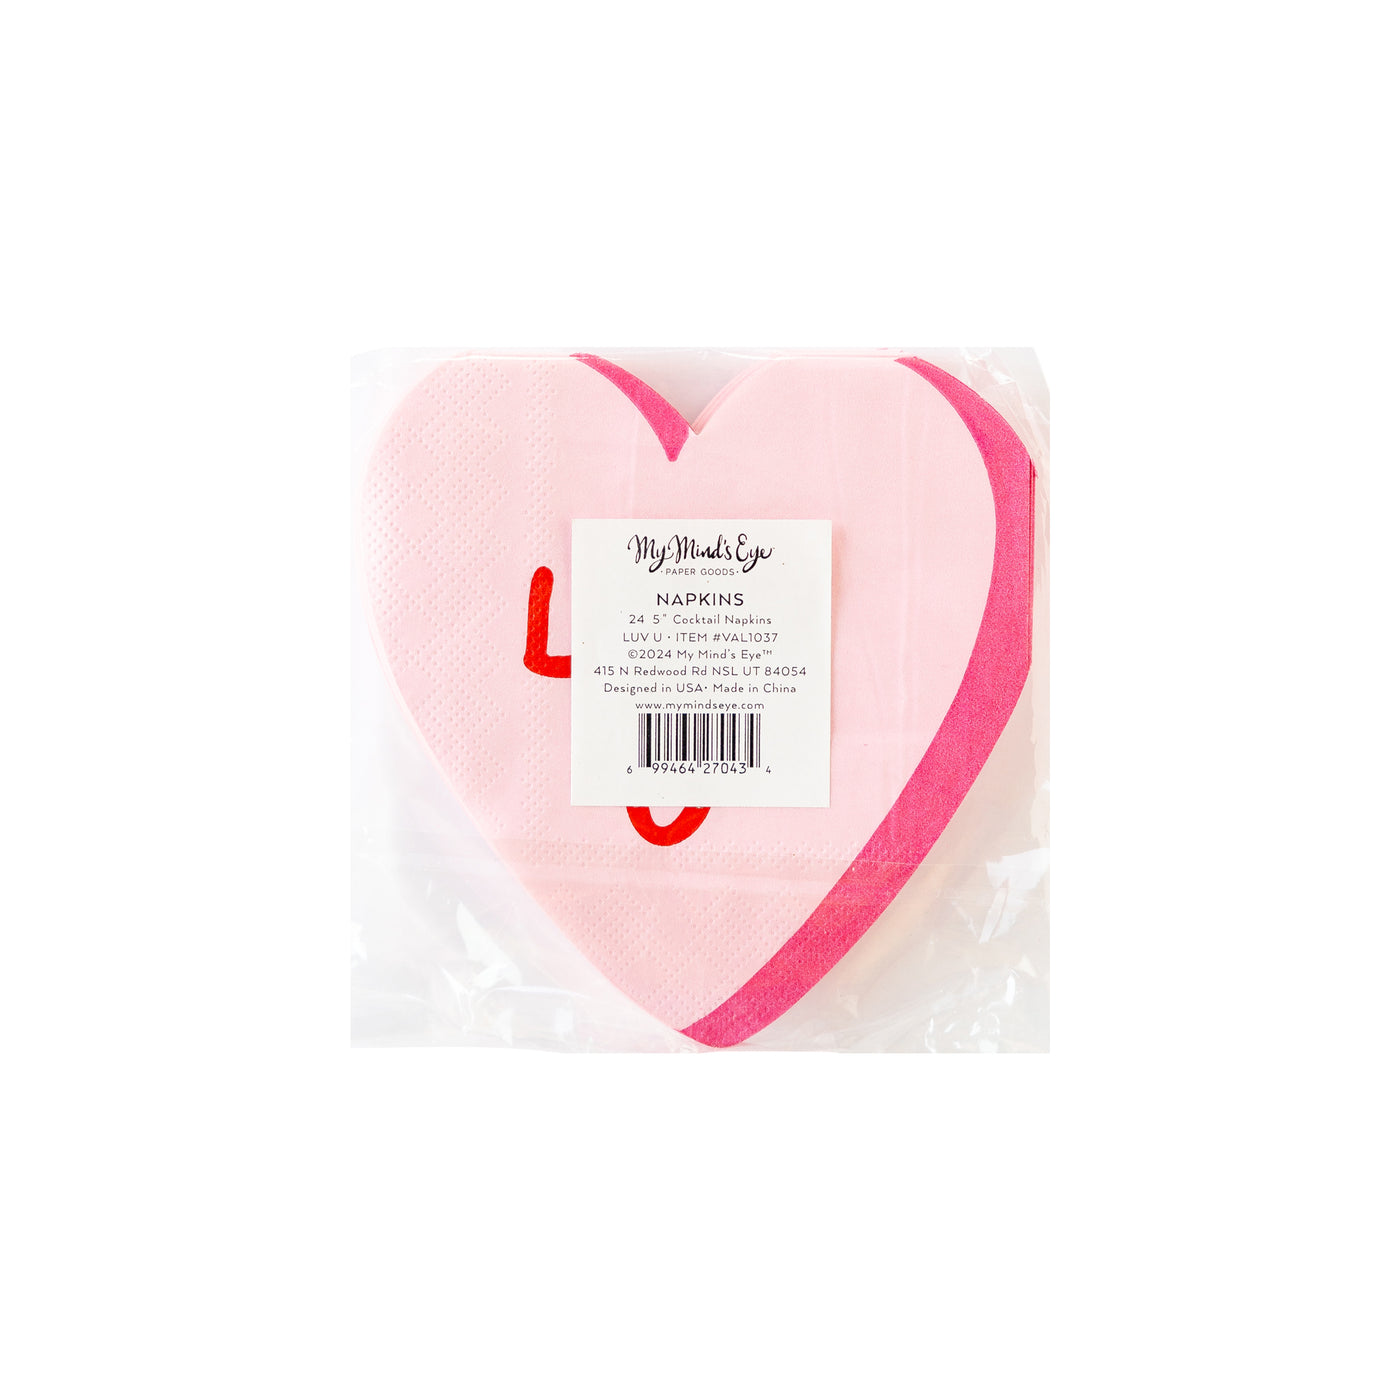 VAL1037 -  Luv U Heart Shaped Paper Napkin